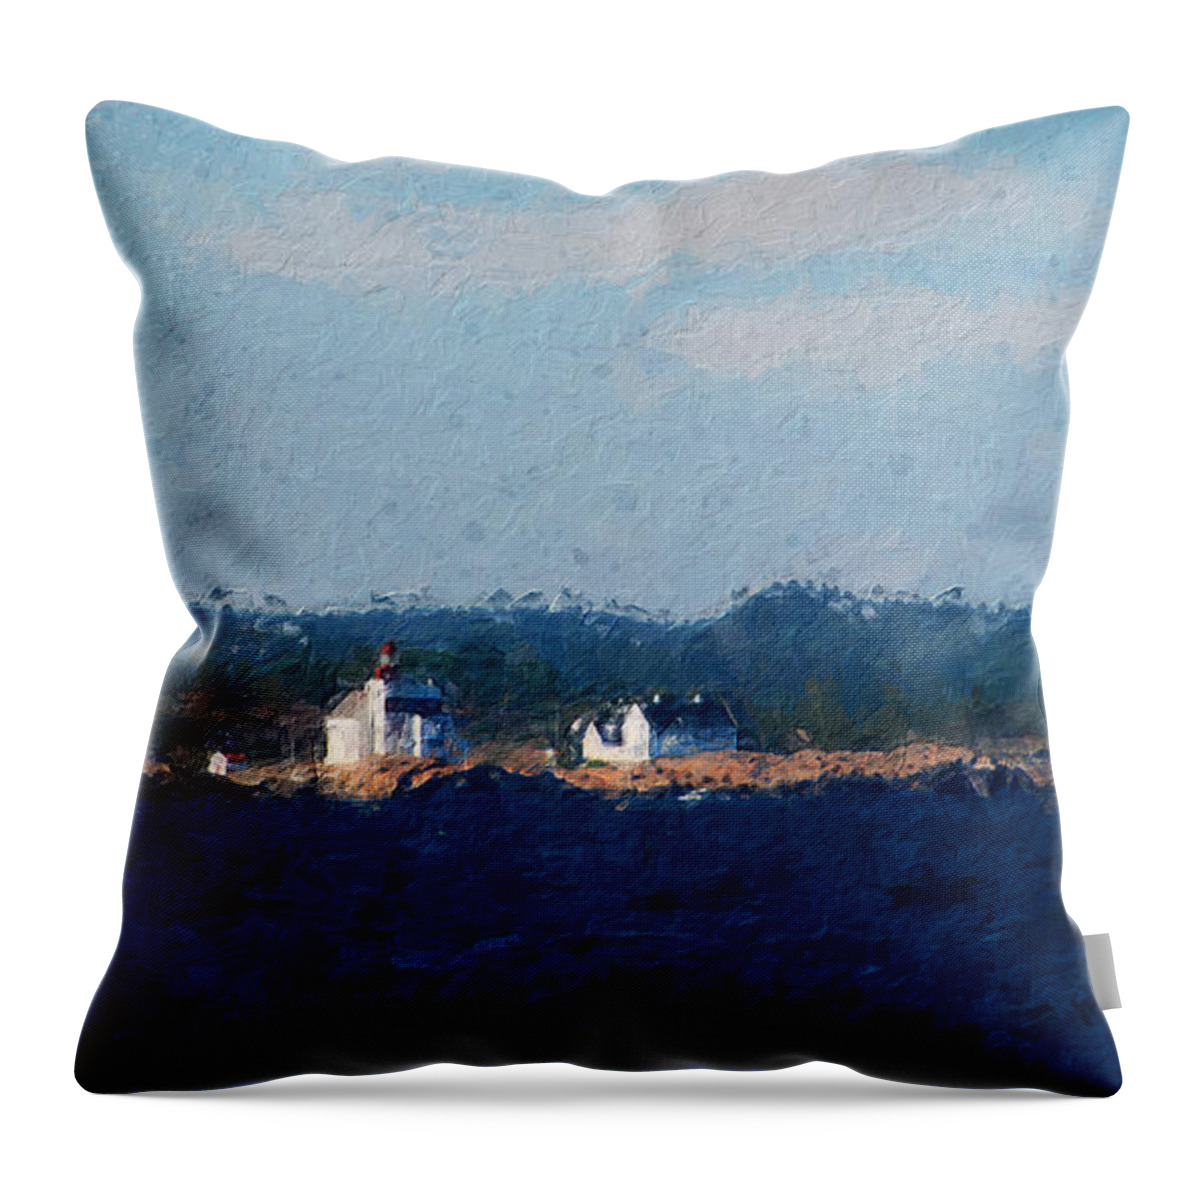 Lighthouse Throw Pillow featuring the digital art Lyngor lighthouse by Geir Rosset